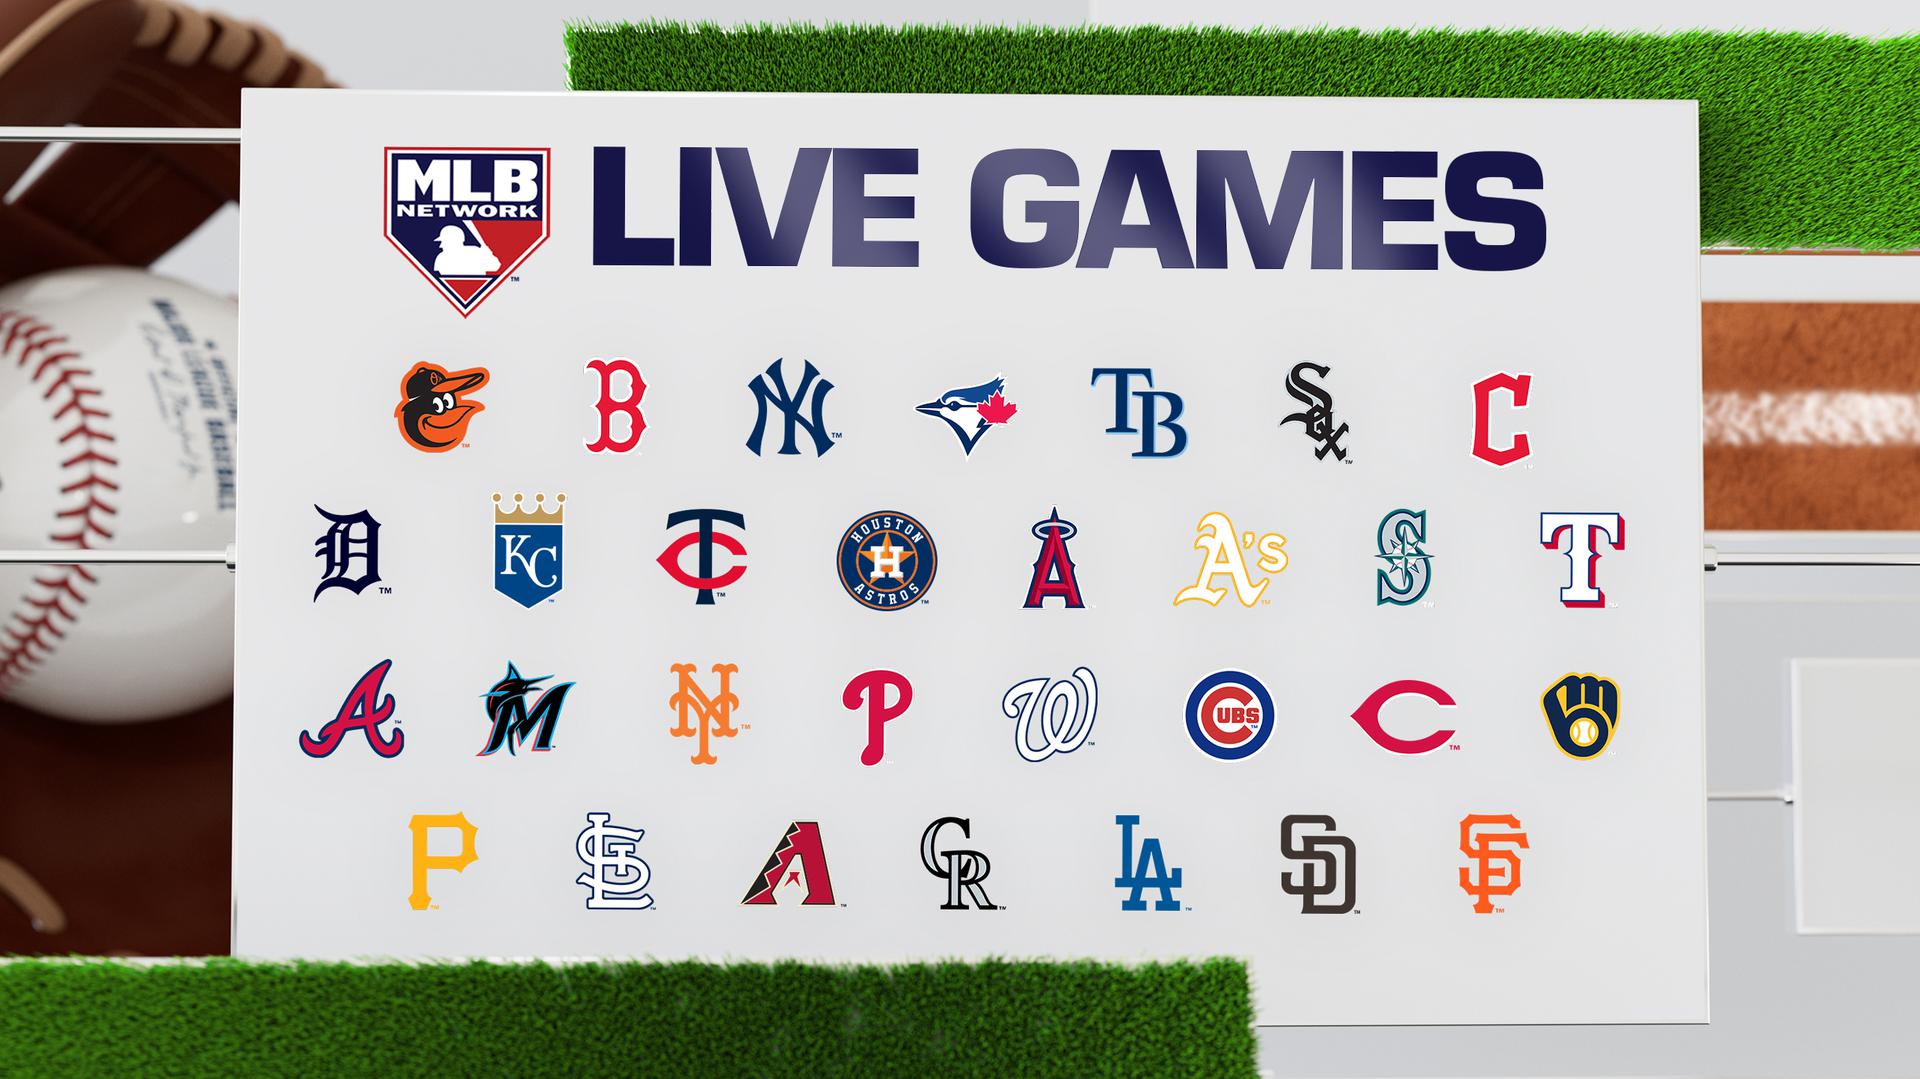 The MLB Network logo and logos from all 30 MLB teams